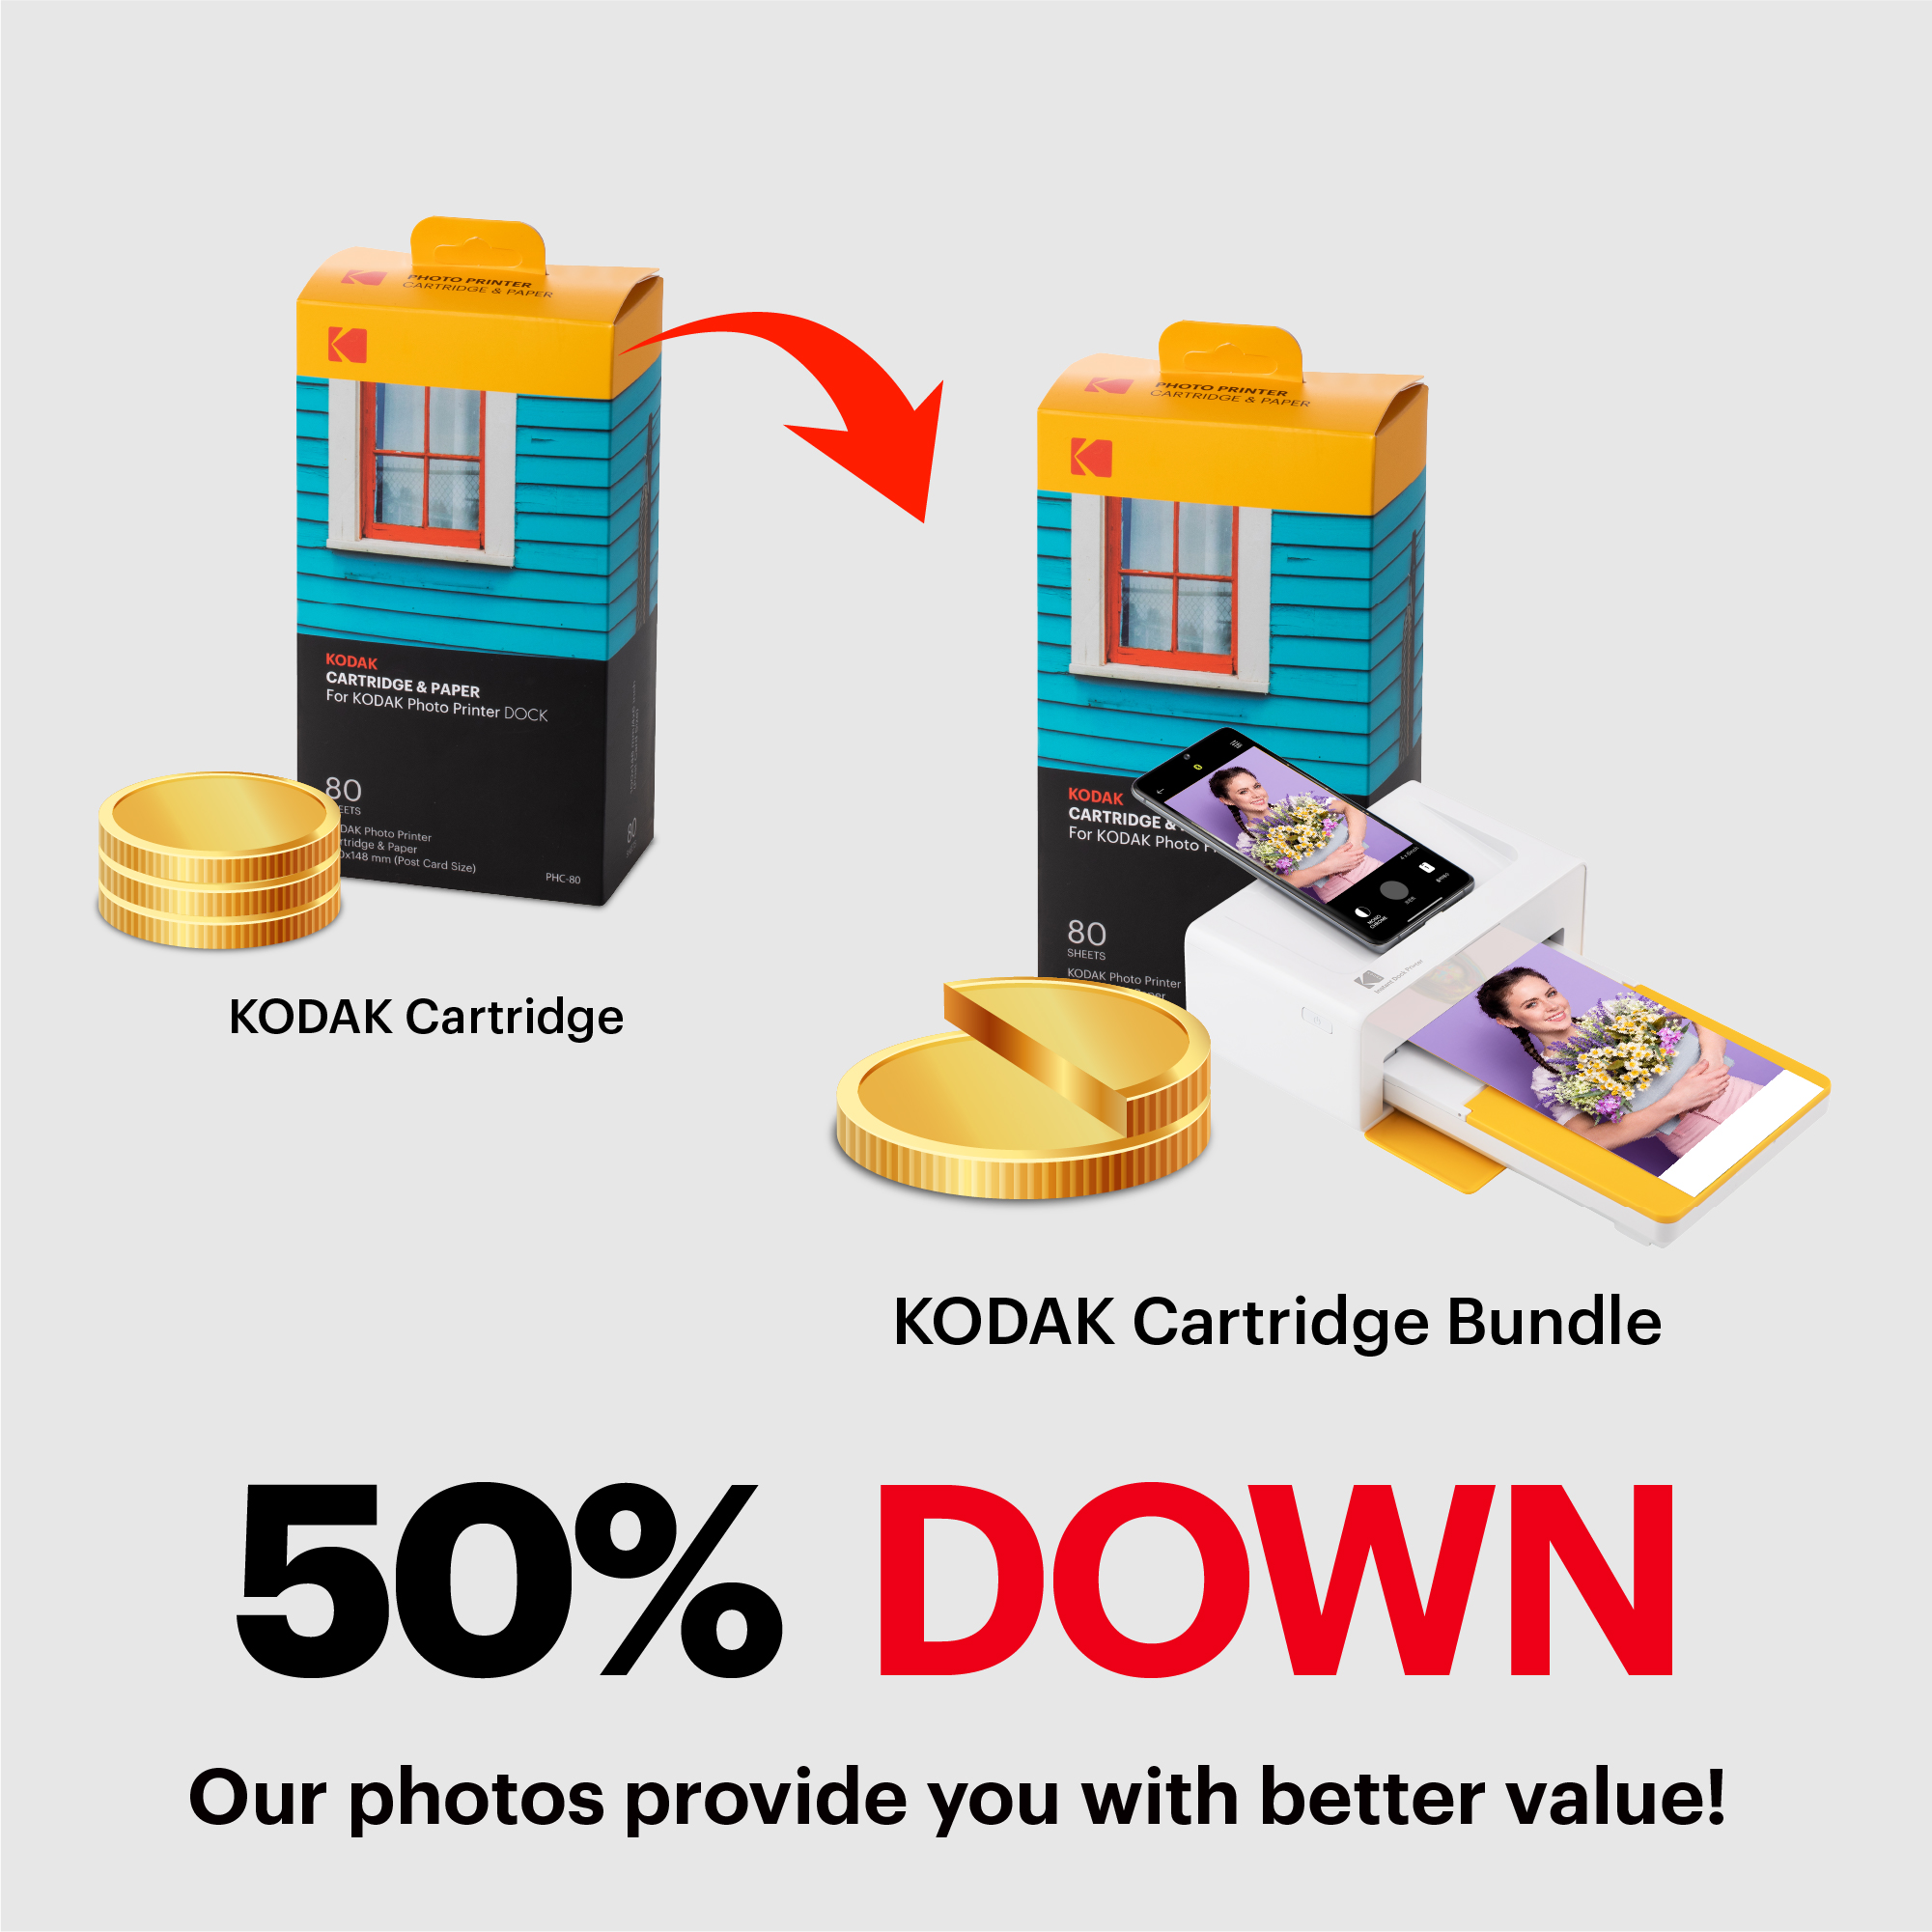 KODAK Dock Plus 4PASS Instant Photo Printer (4x6 inches) + 90 Sheets Bundle - image 2 of 8